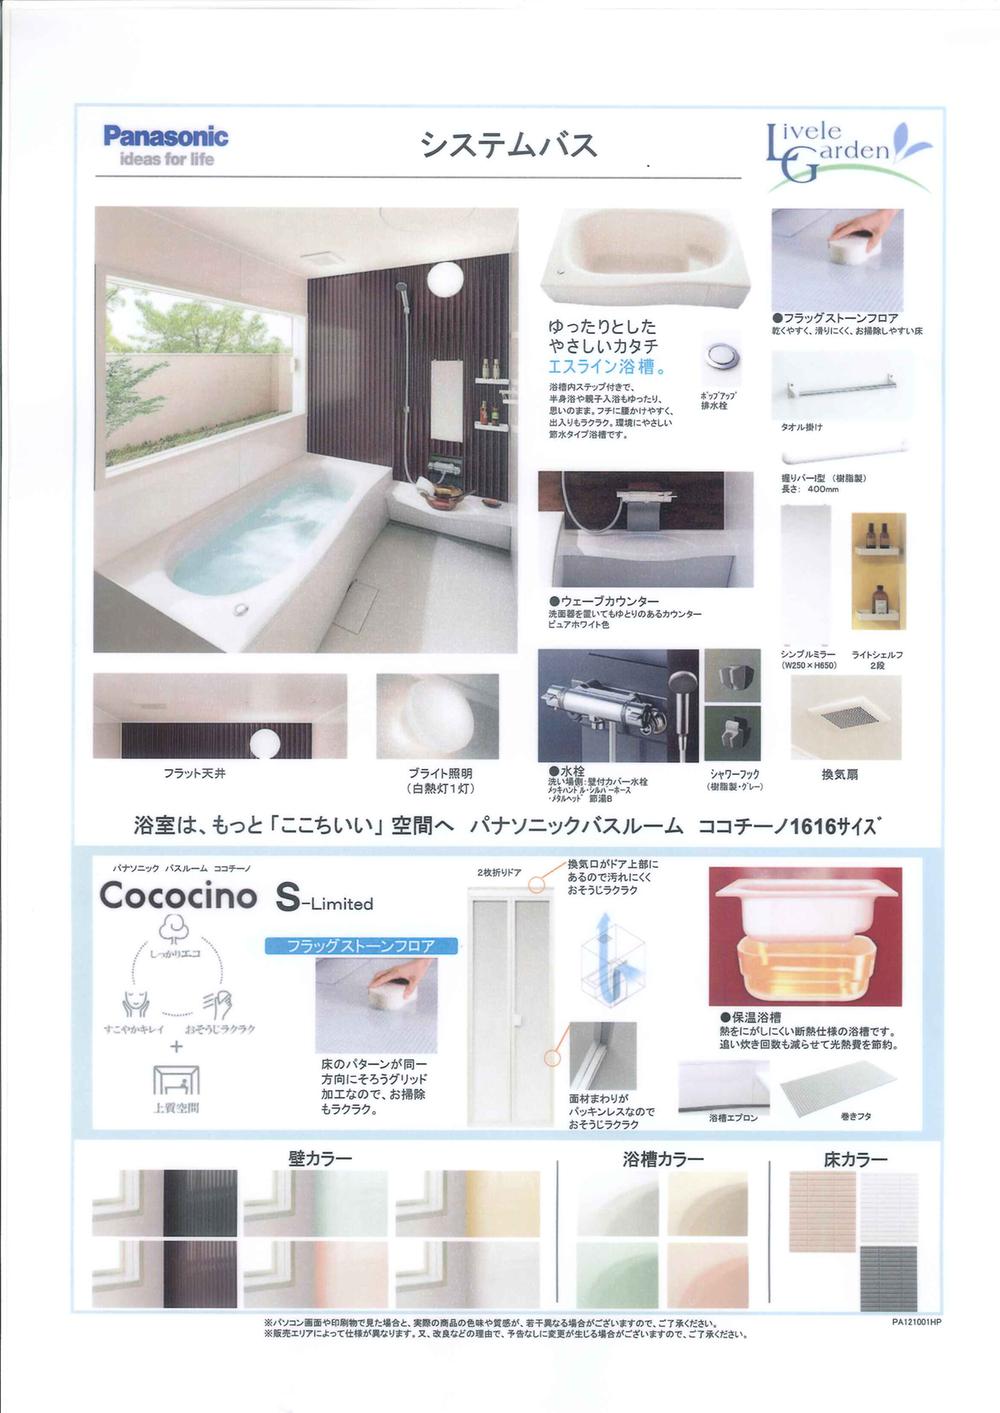 Bathroom. System bus (made by Panasonic)